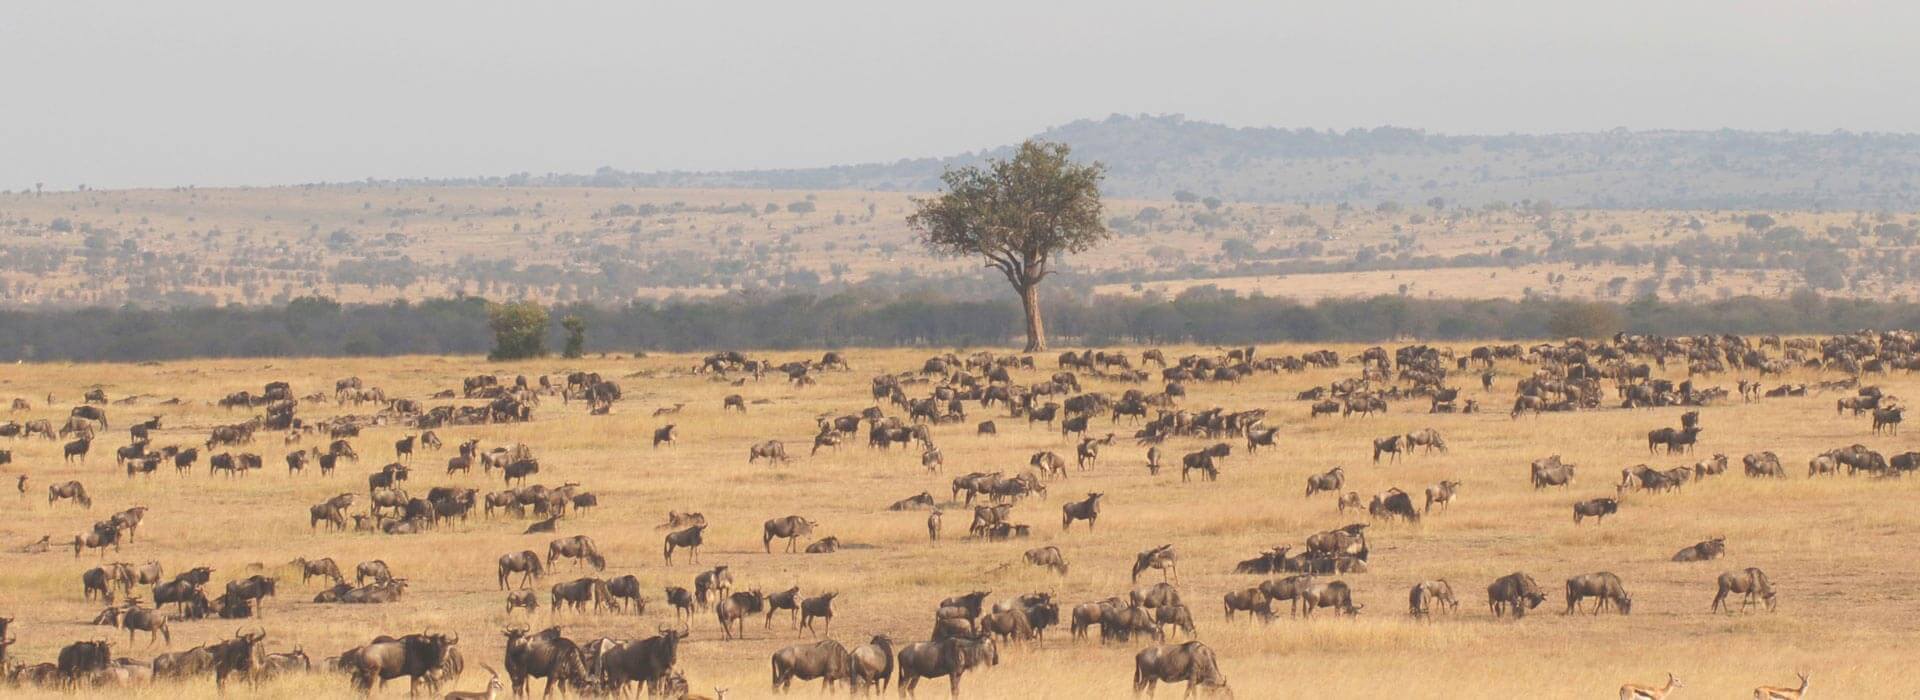 Safari Tanzania Background